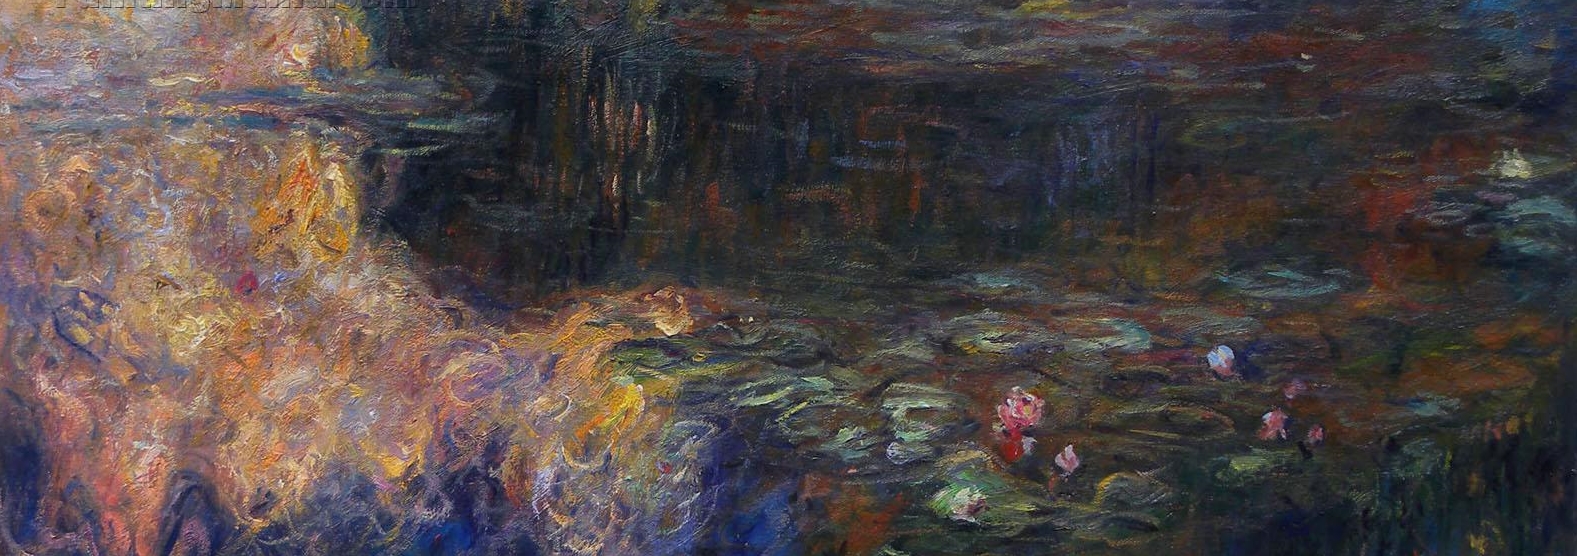 Claude+Monet-1840-1926 (609).jpg